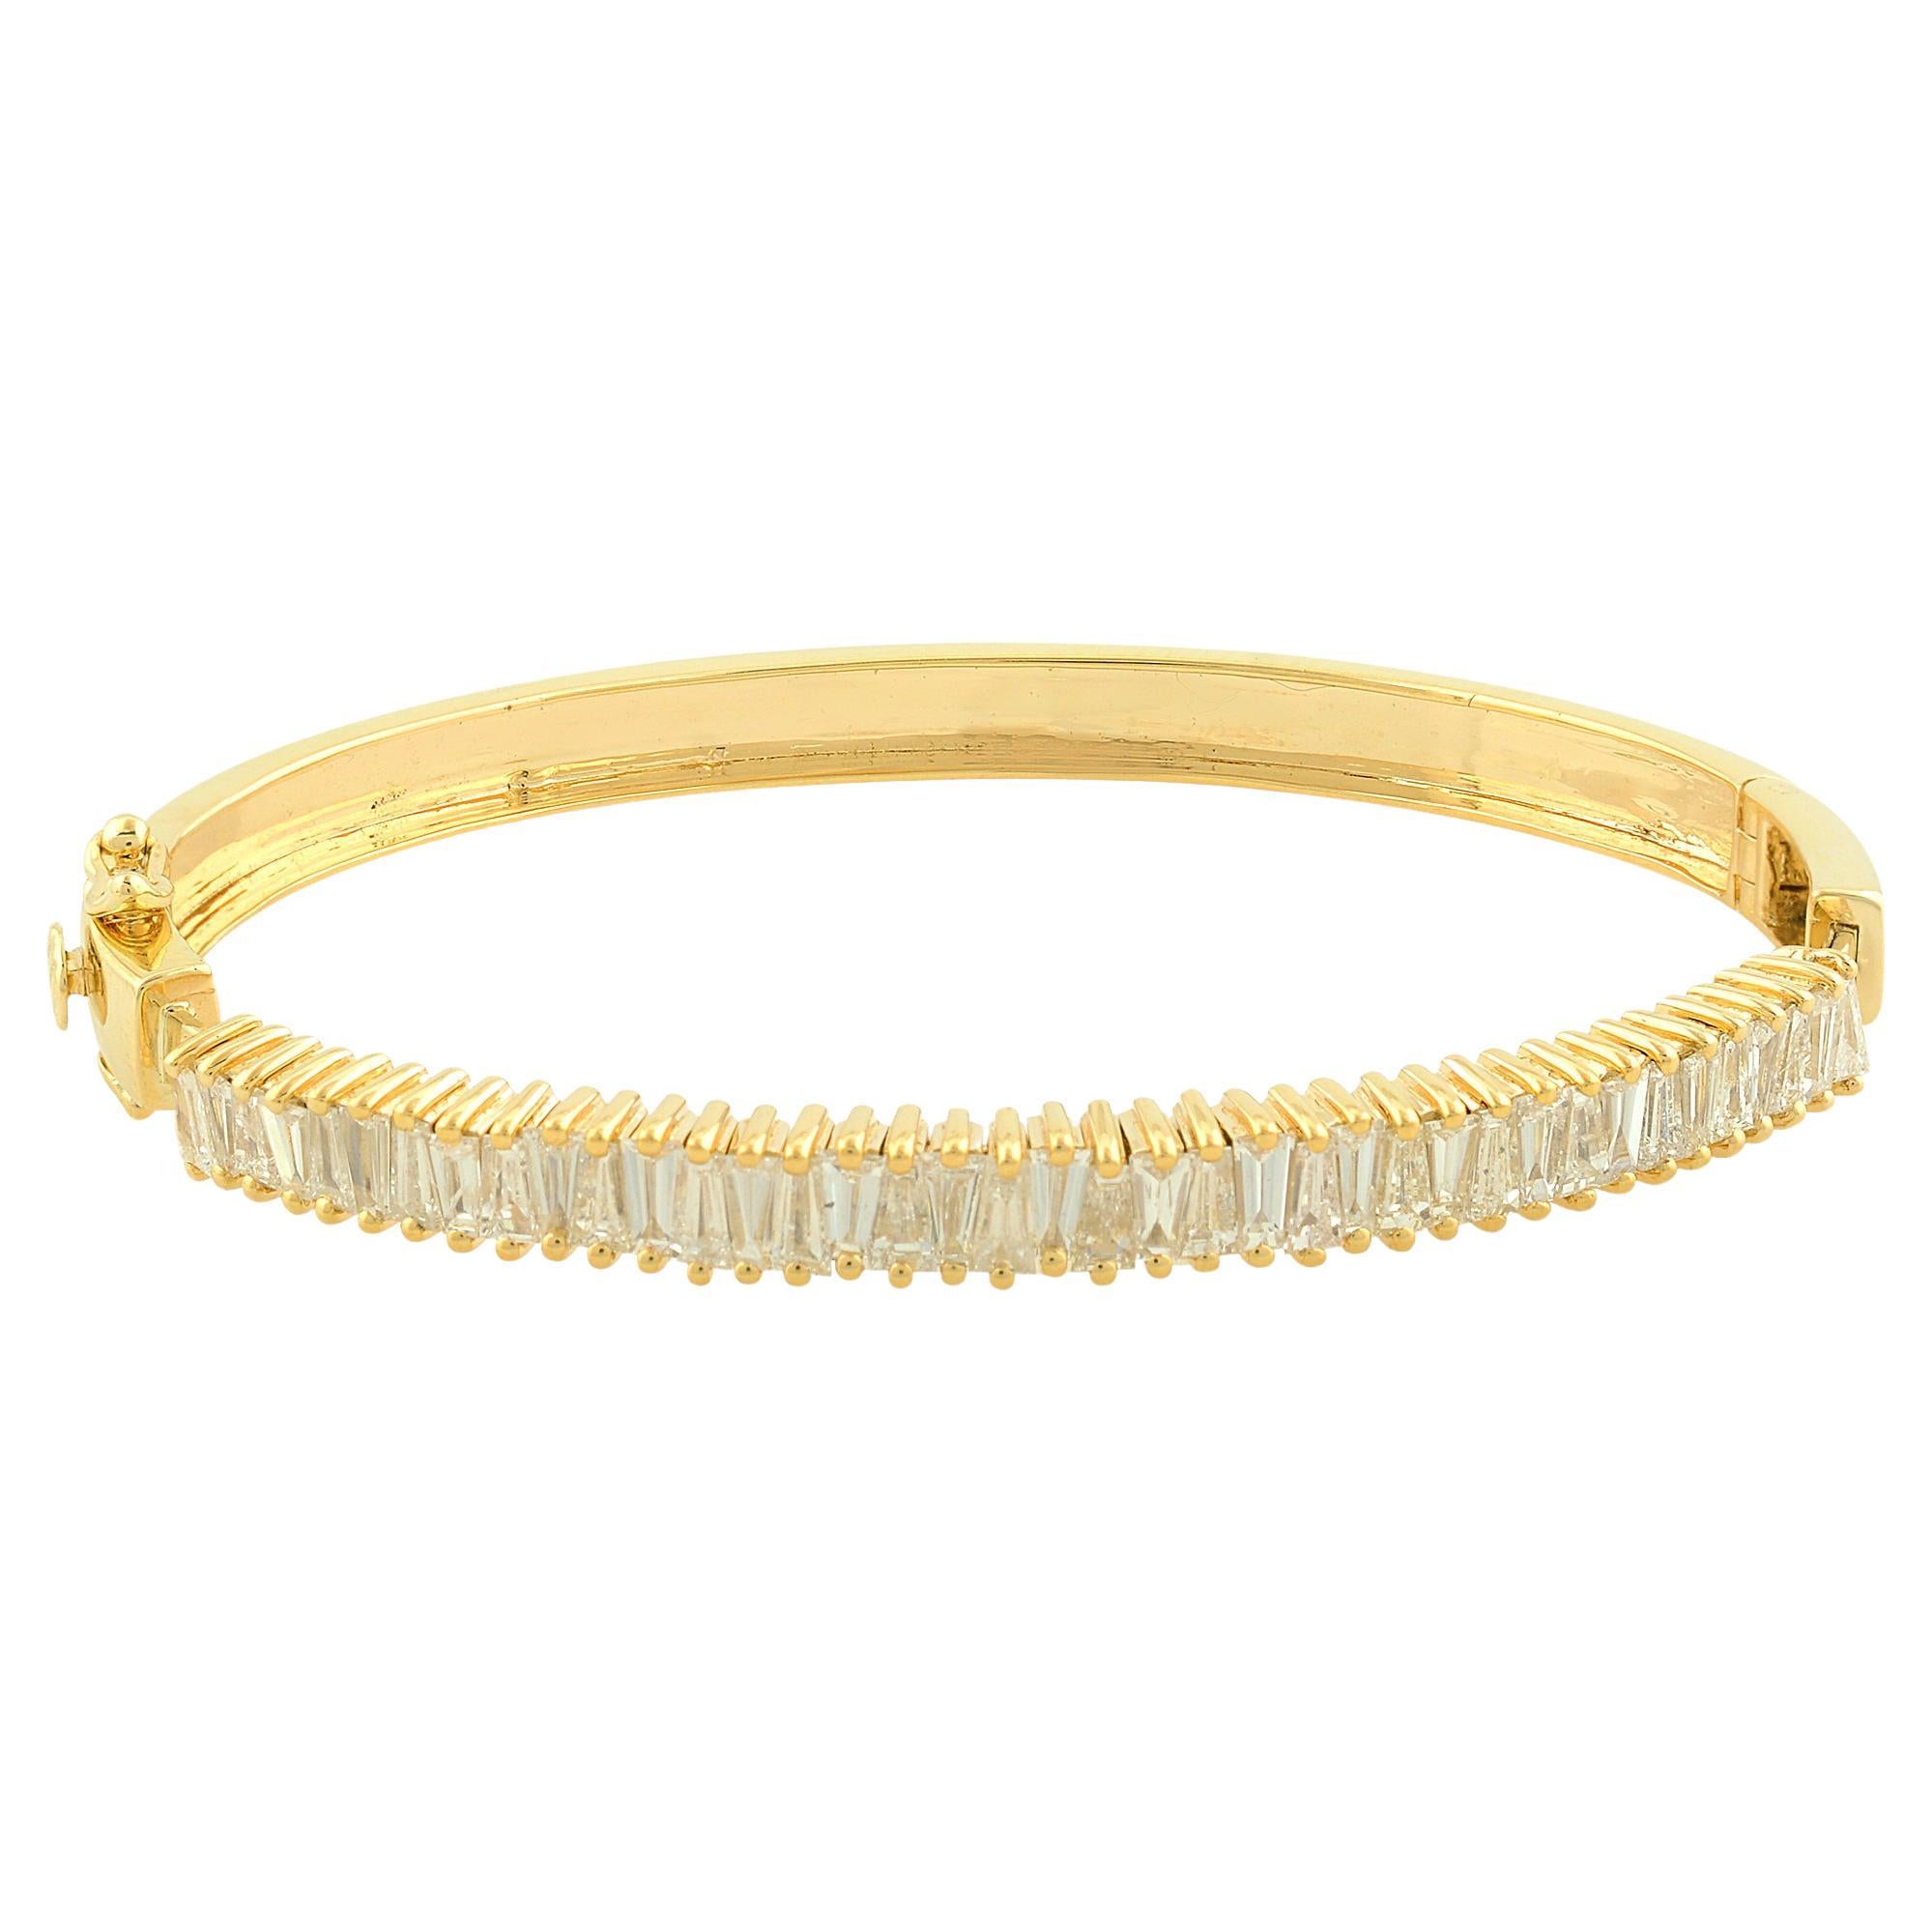 Natural Tapered Baguette Diamond Bangle Bracelet 14 Karat Yellow Gold Jewelry